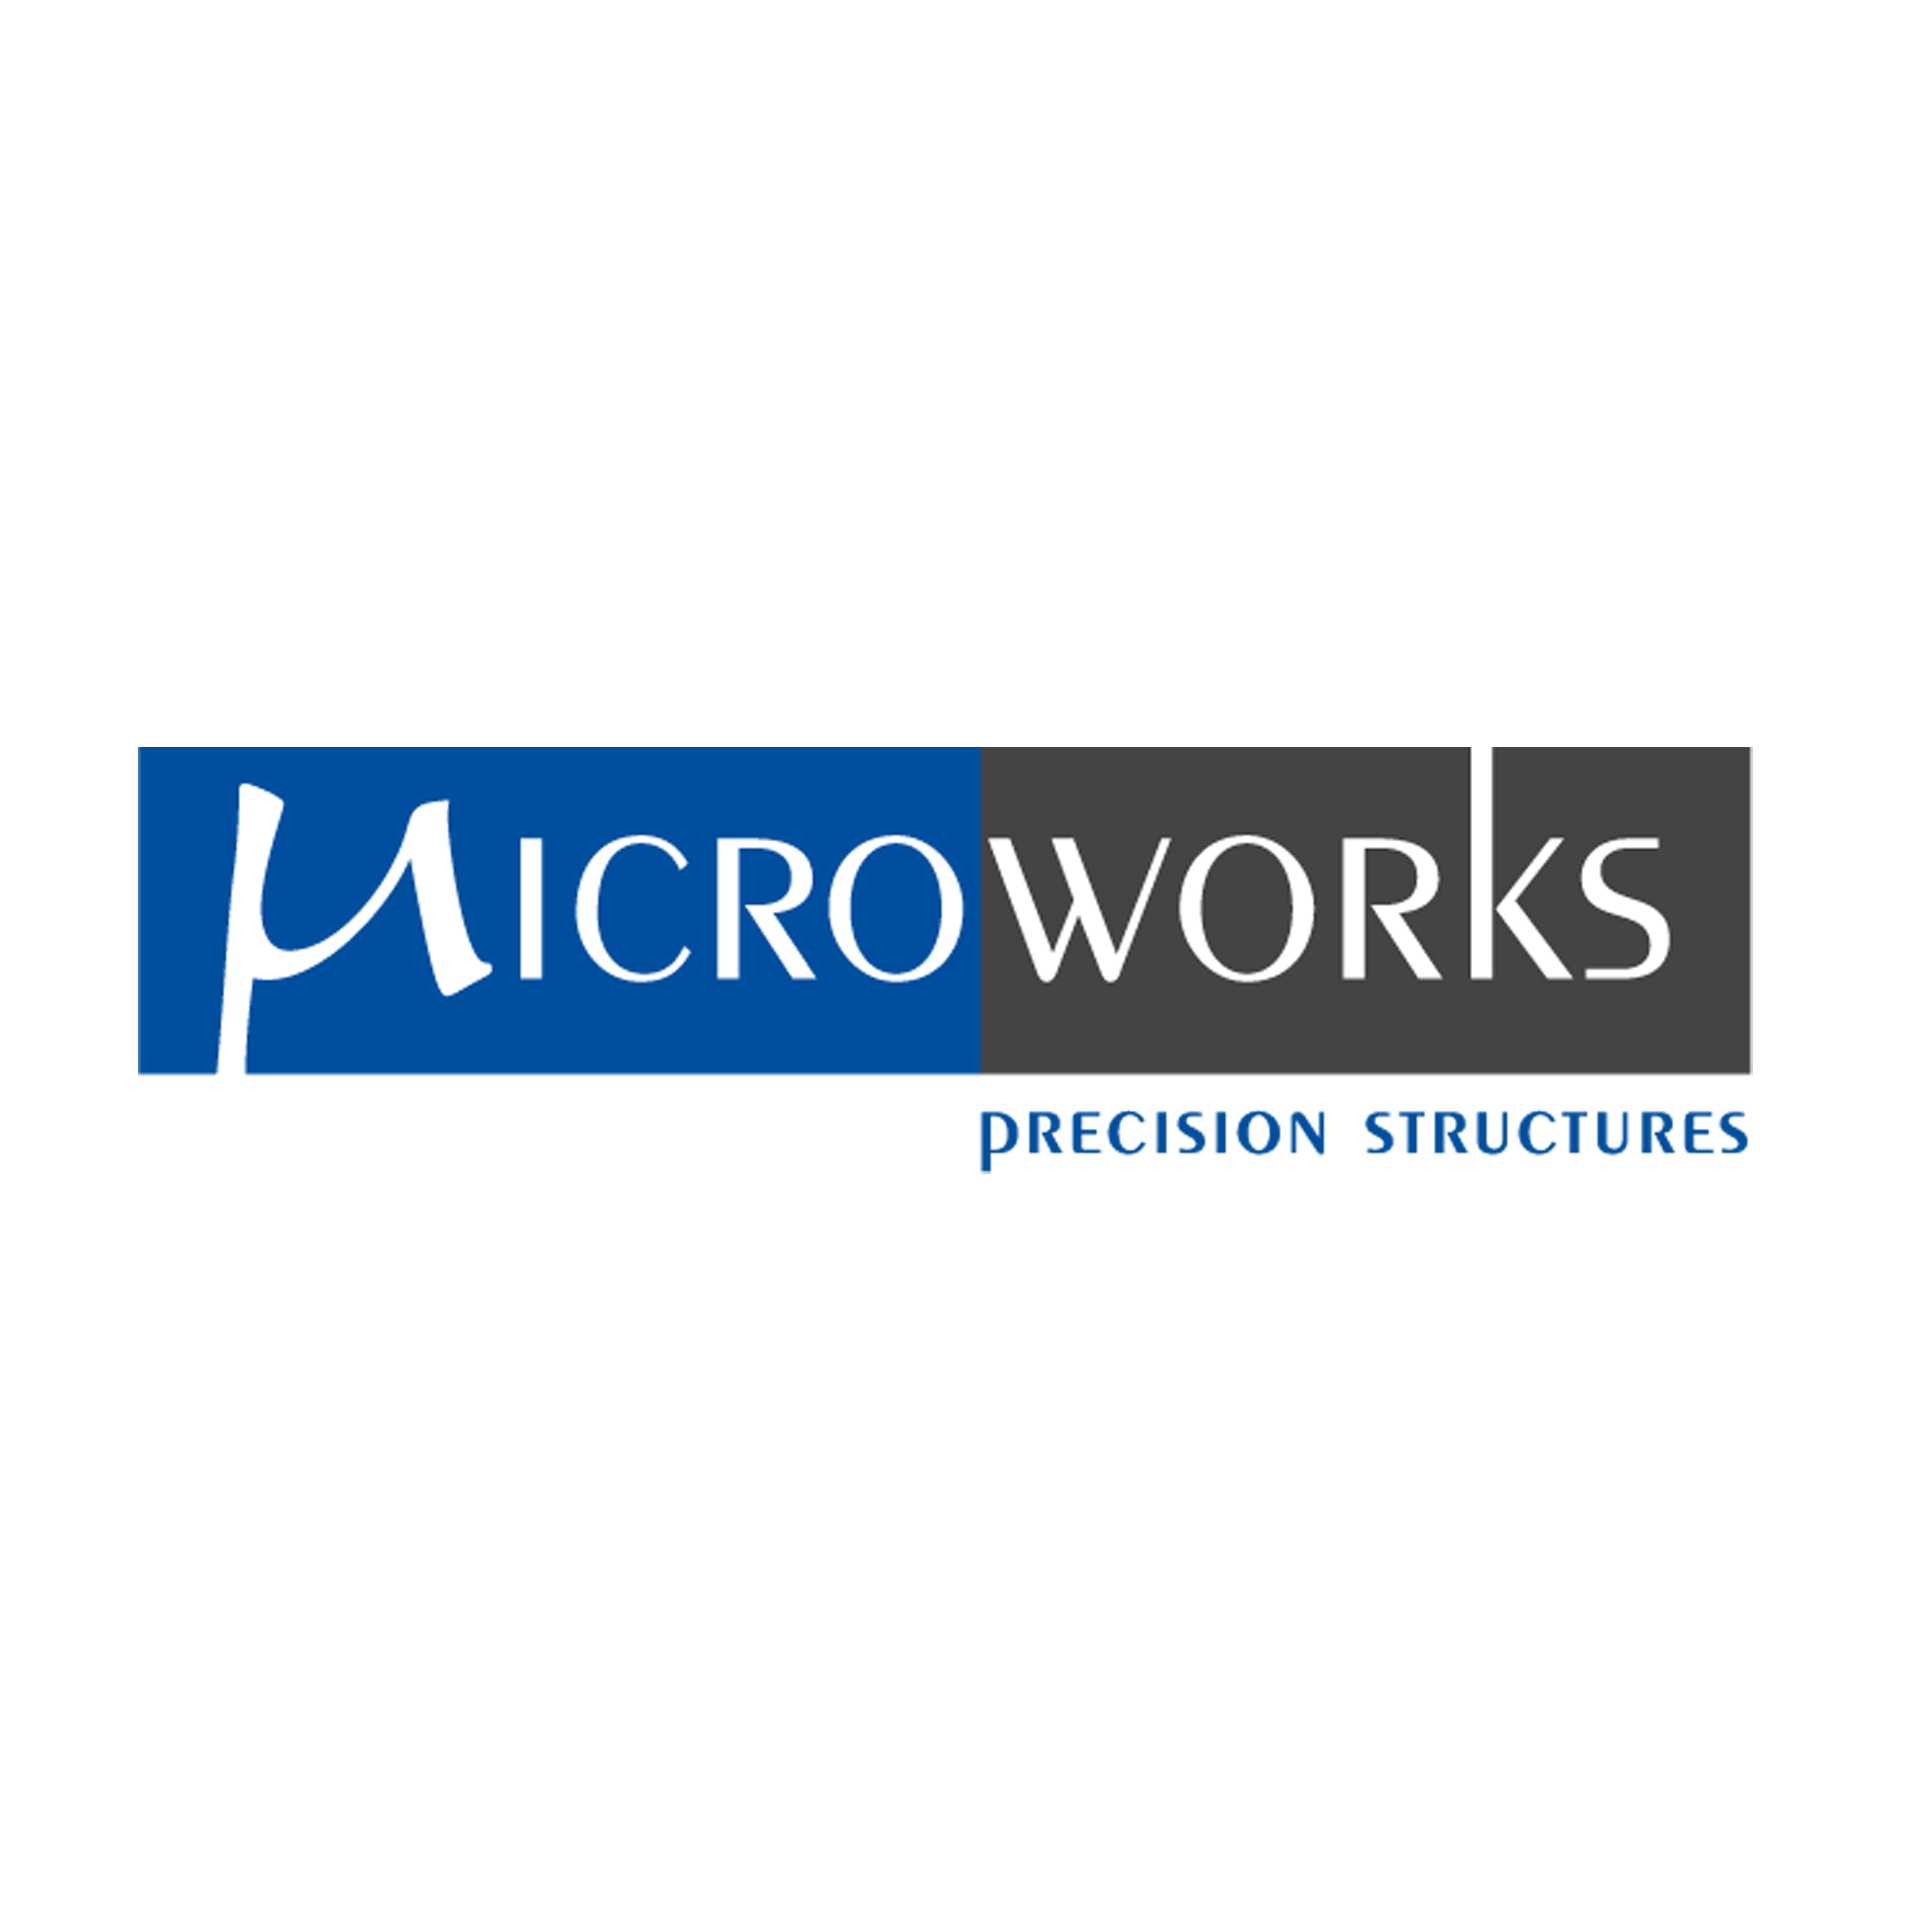 Microworks